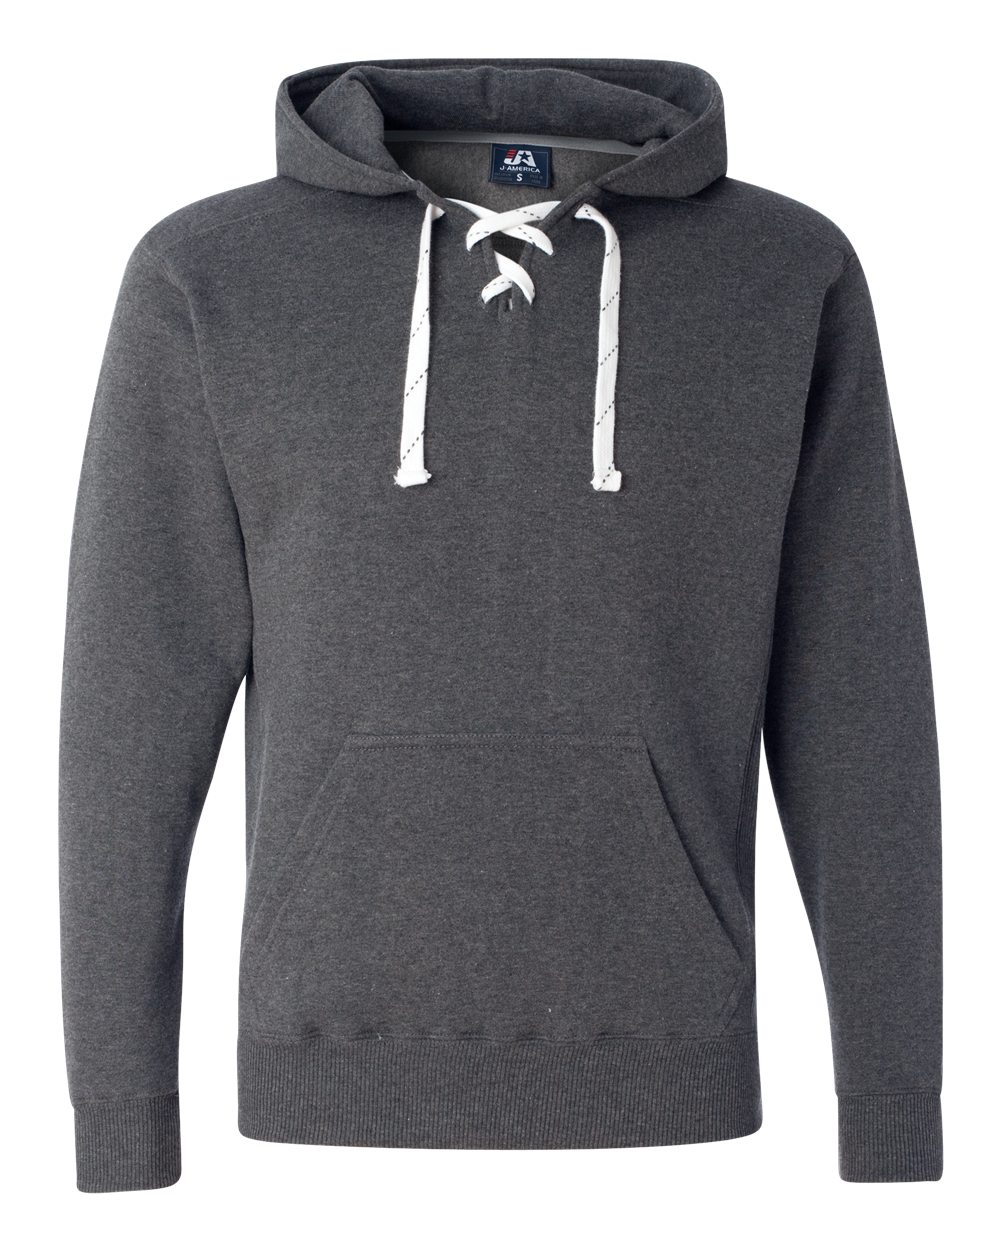  J. America NCAA Mens Sports lace up hoodie sweatshirt : Sports  & Outdoors